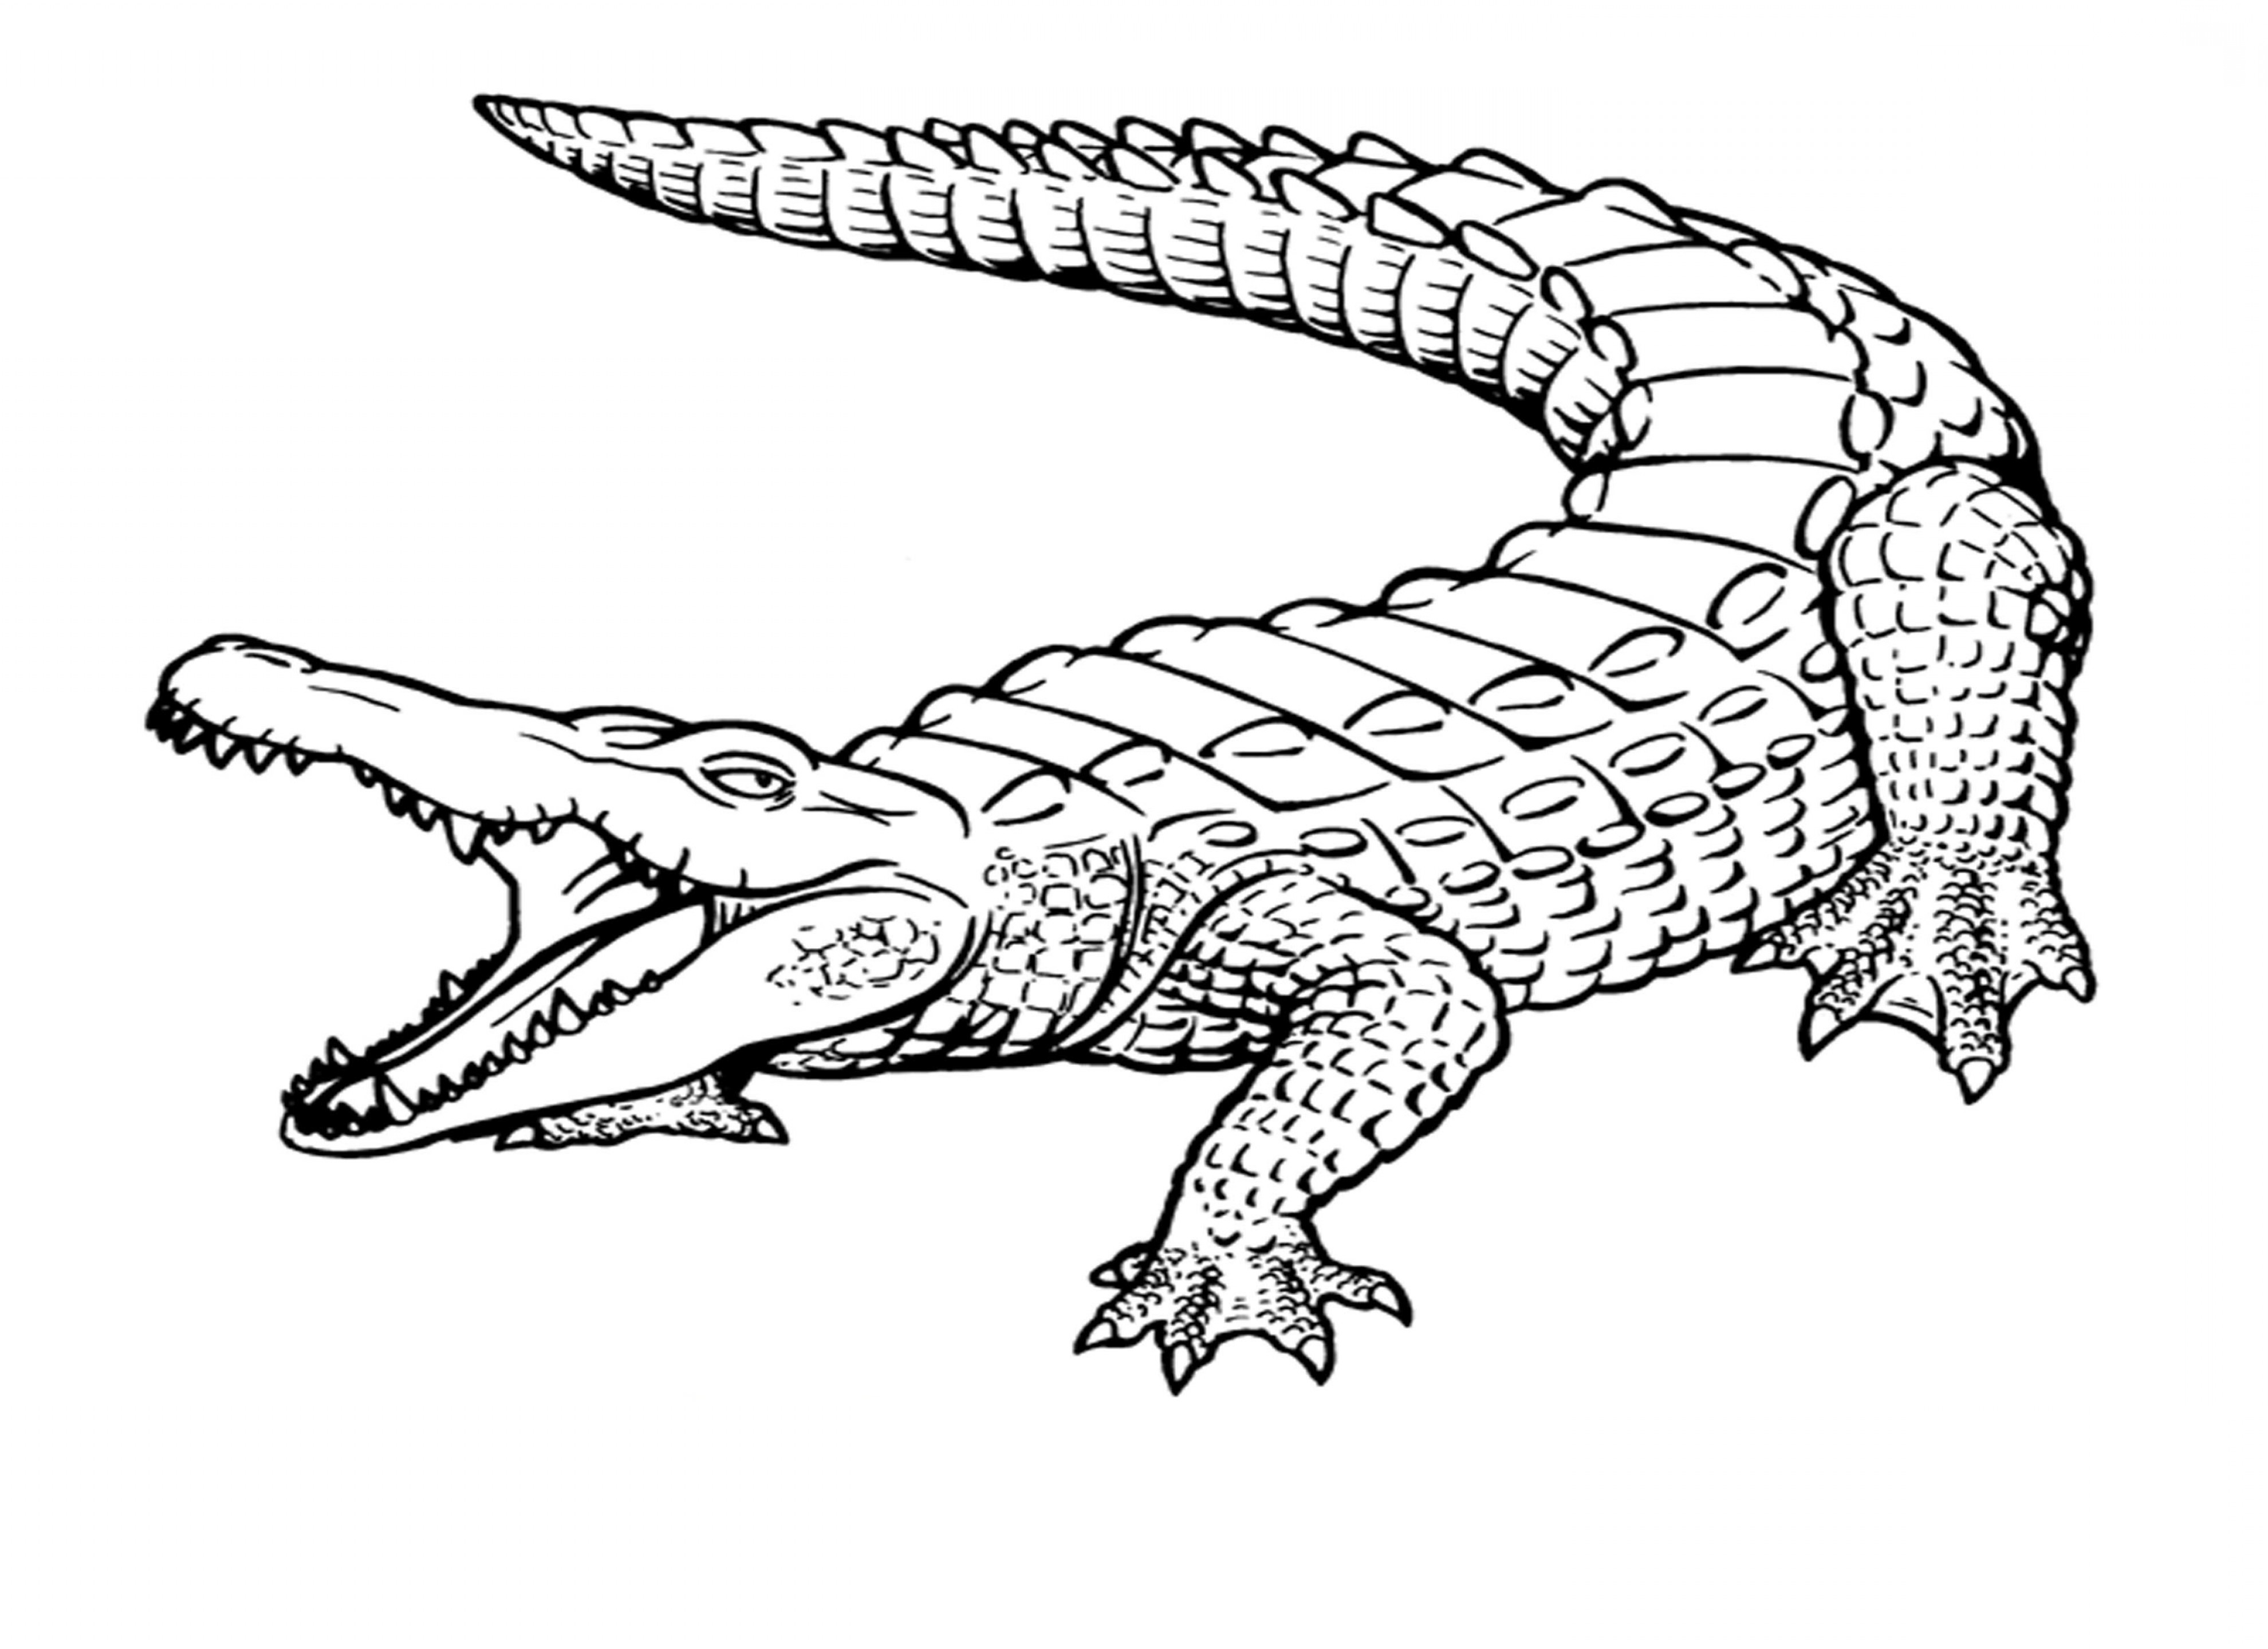 crocodile-line-drawing-at-getdrawings-free-download